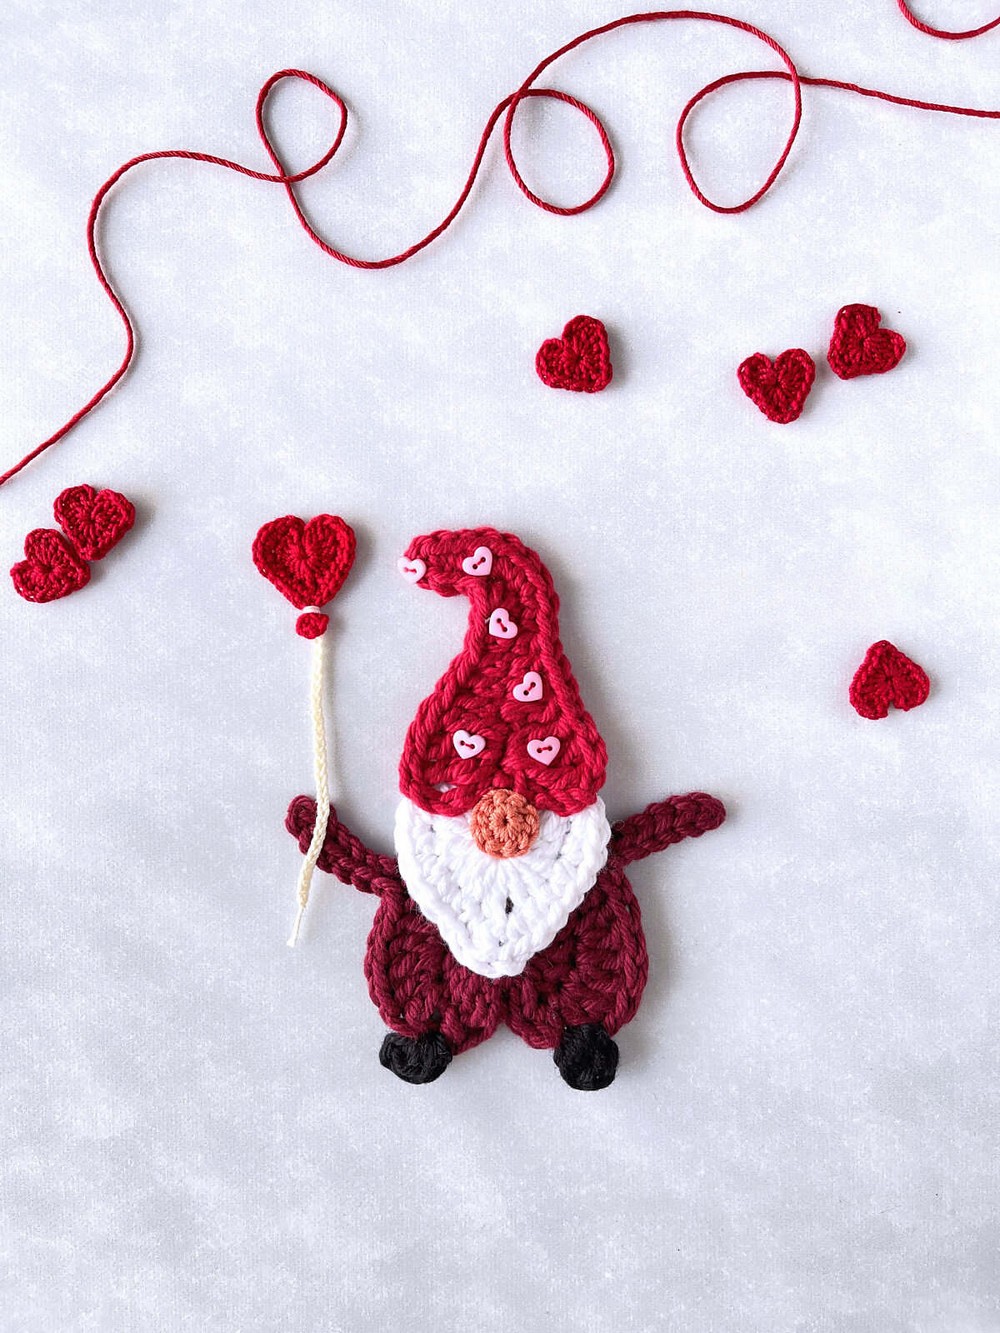 How to Crochet Valentine's Day Gnome Applique